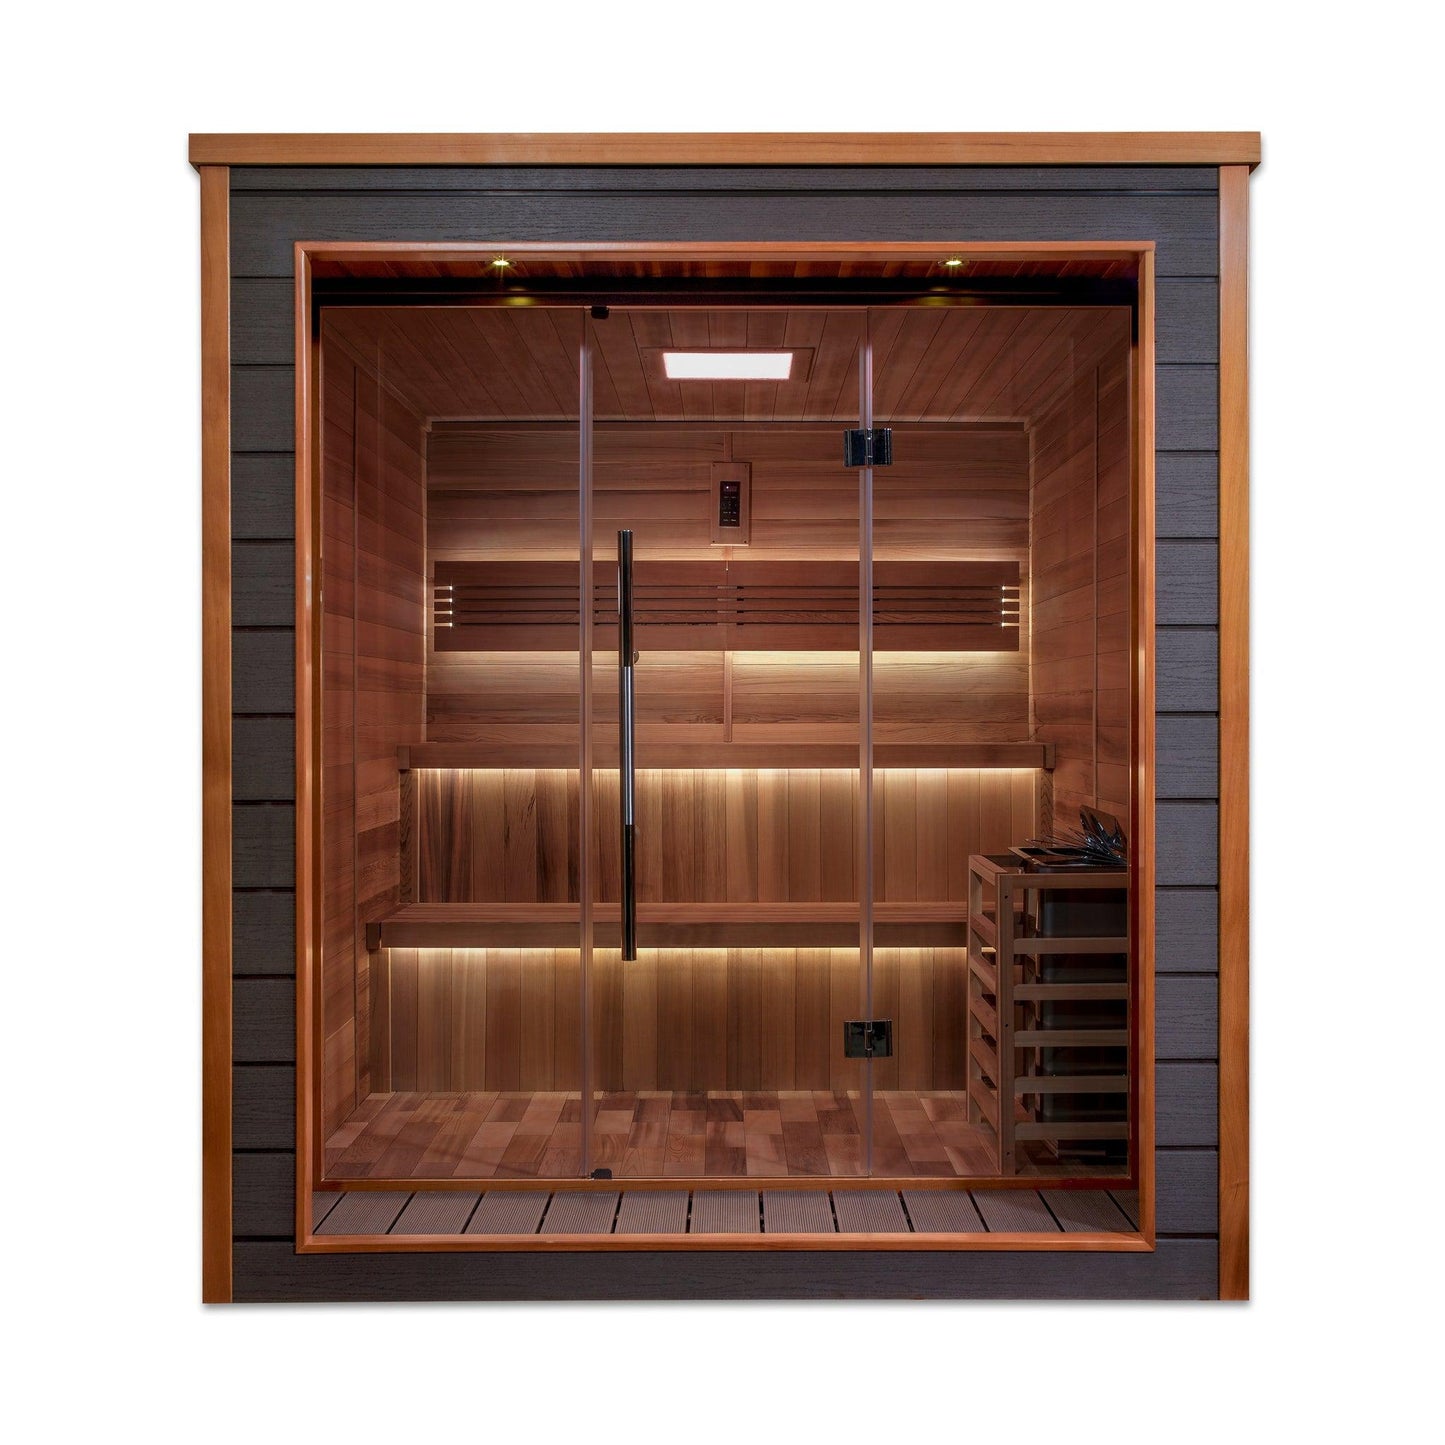 Golden Designs Bergen 6-Person Outdoor-Indoor Traditional Steam Sauna in Canadian Red Cedar Interior